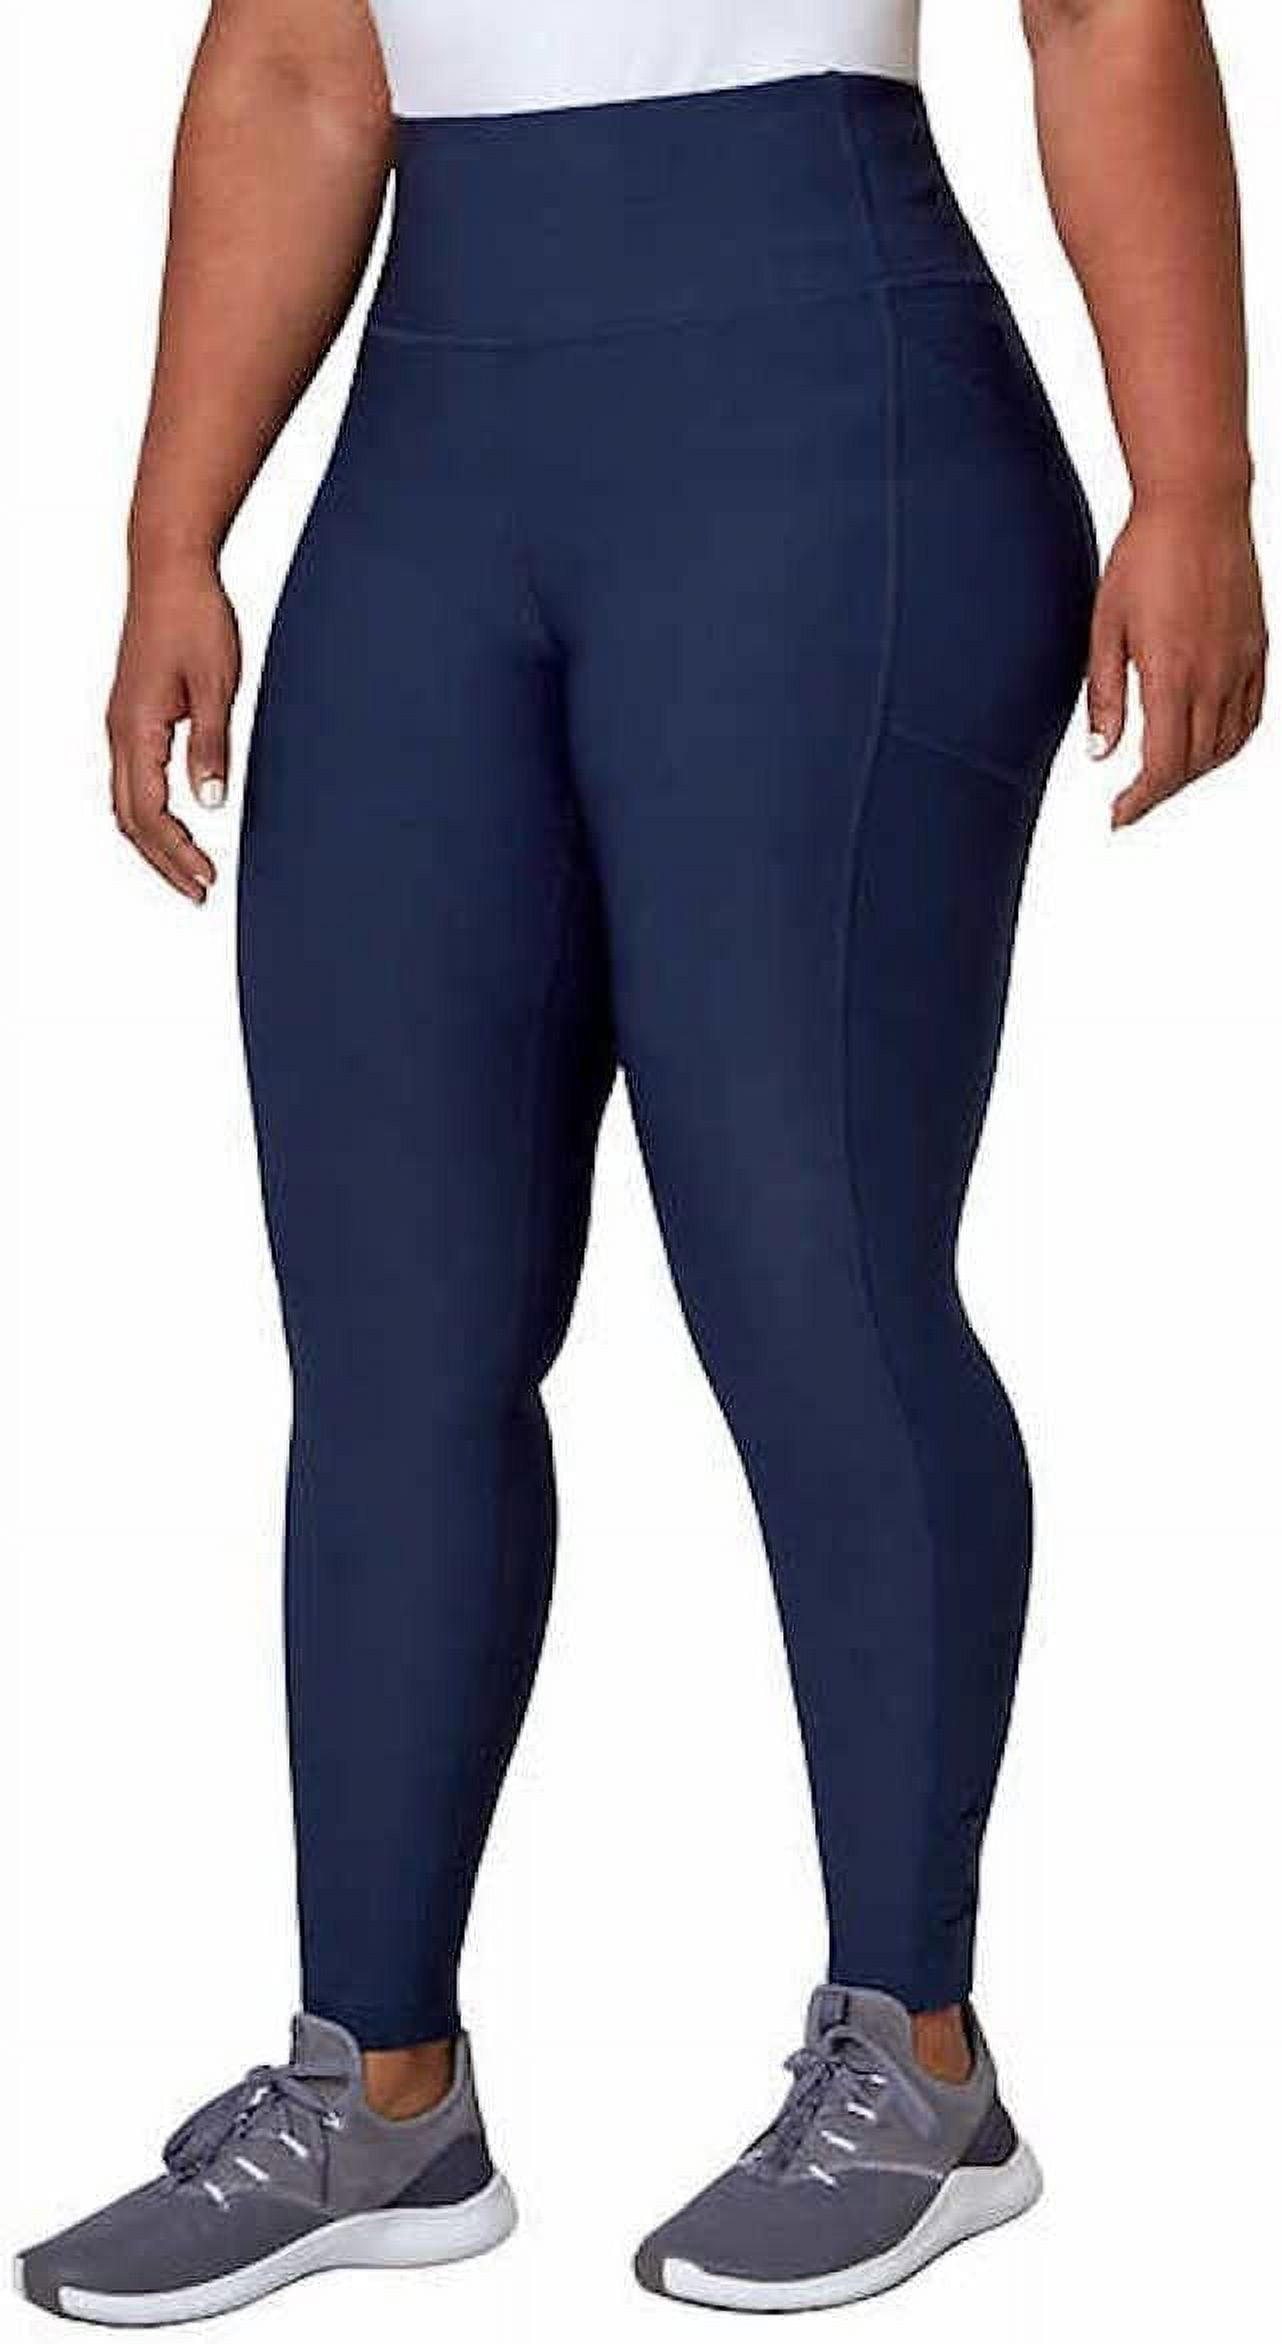 Mondetta Ladies High Waist Side Pocket Active Tight Pant Leggings, Navy,  X-Large